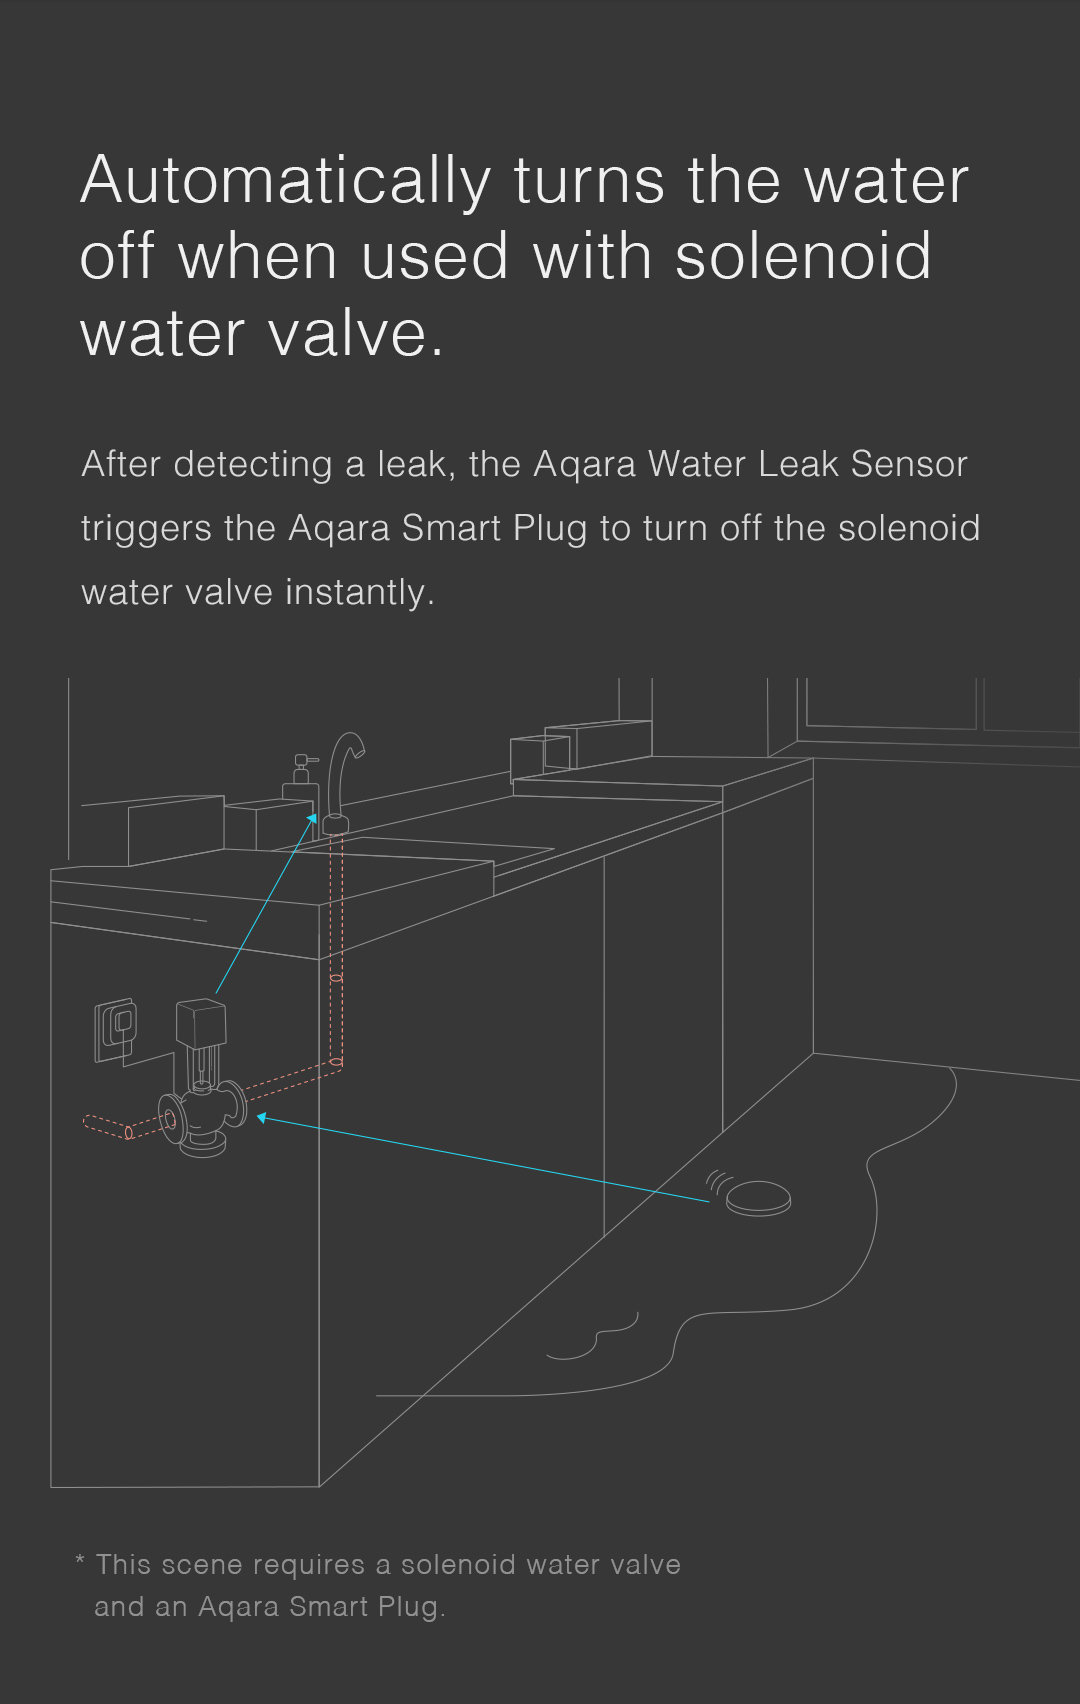 Aqara flood sensor can detect water leak and help turn off solenoid water valve